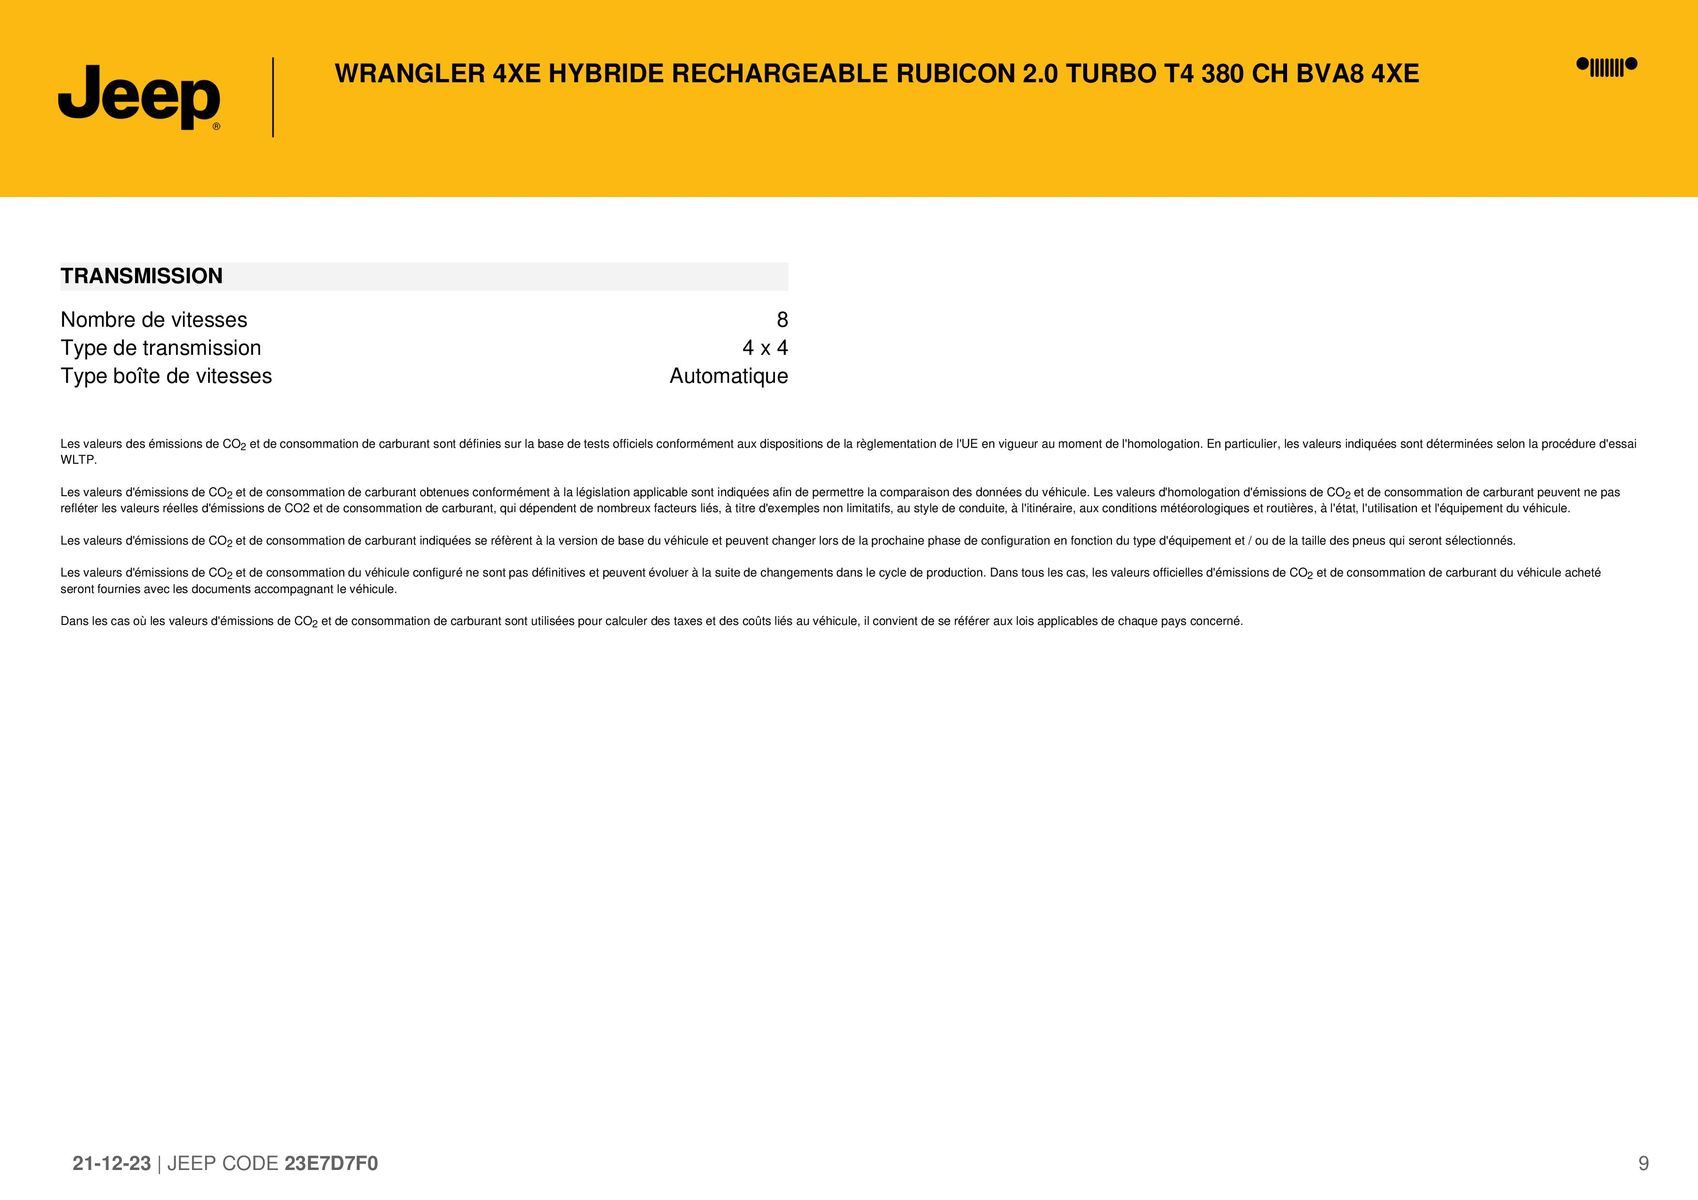 Catalogue WRANGLER 4XE HYBRIDE RECHARGEABLE RUBICON 2.0 TURBO T4 380 CH BVA8 4XE", page 00009